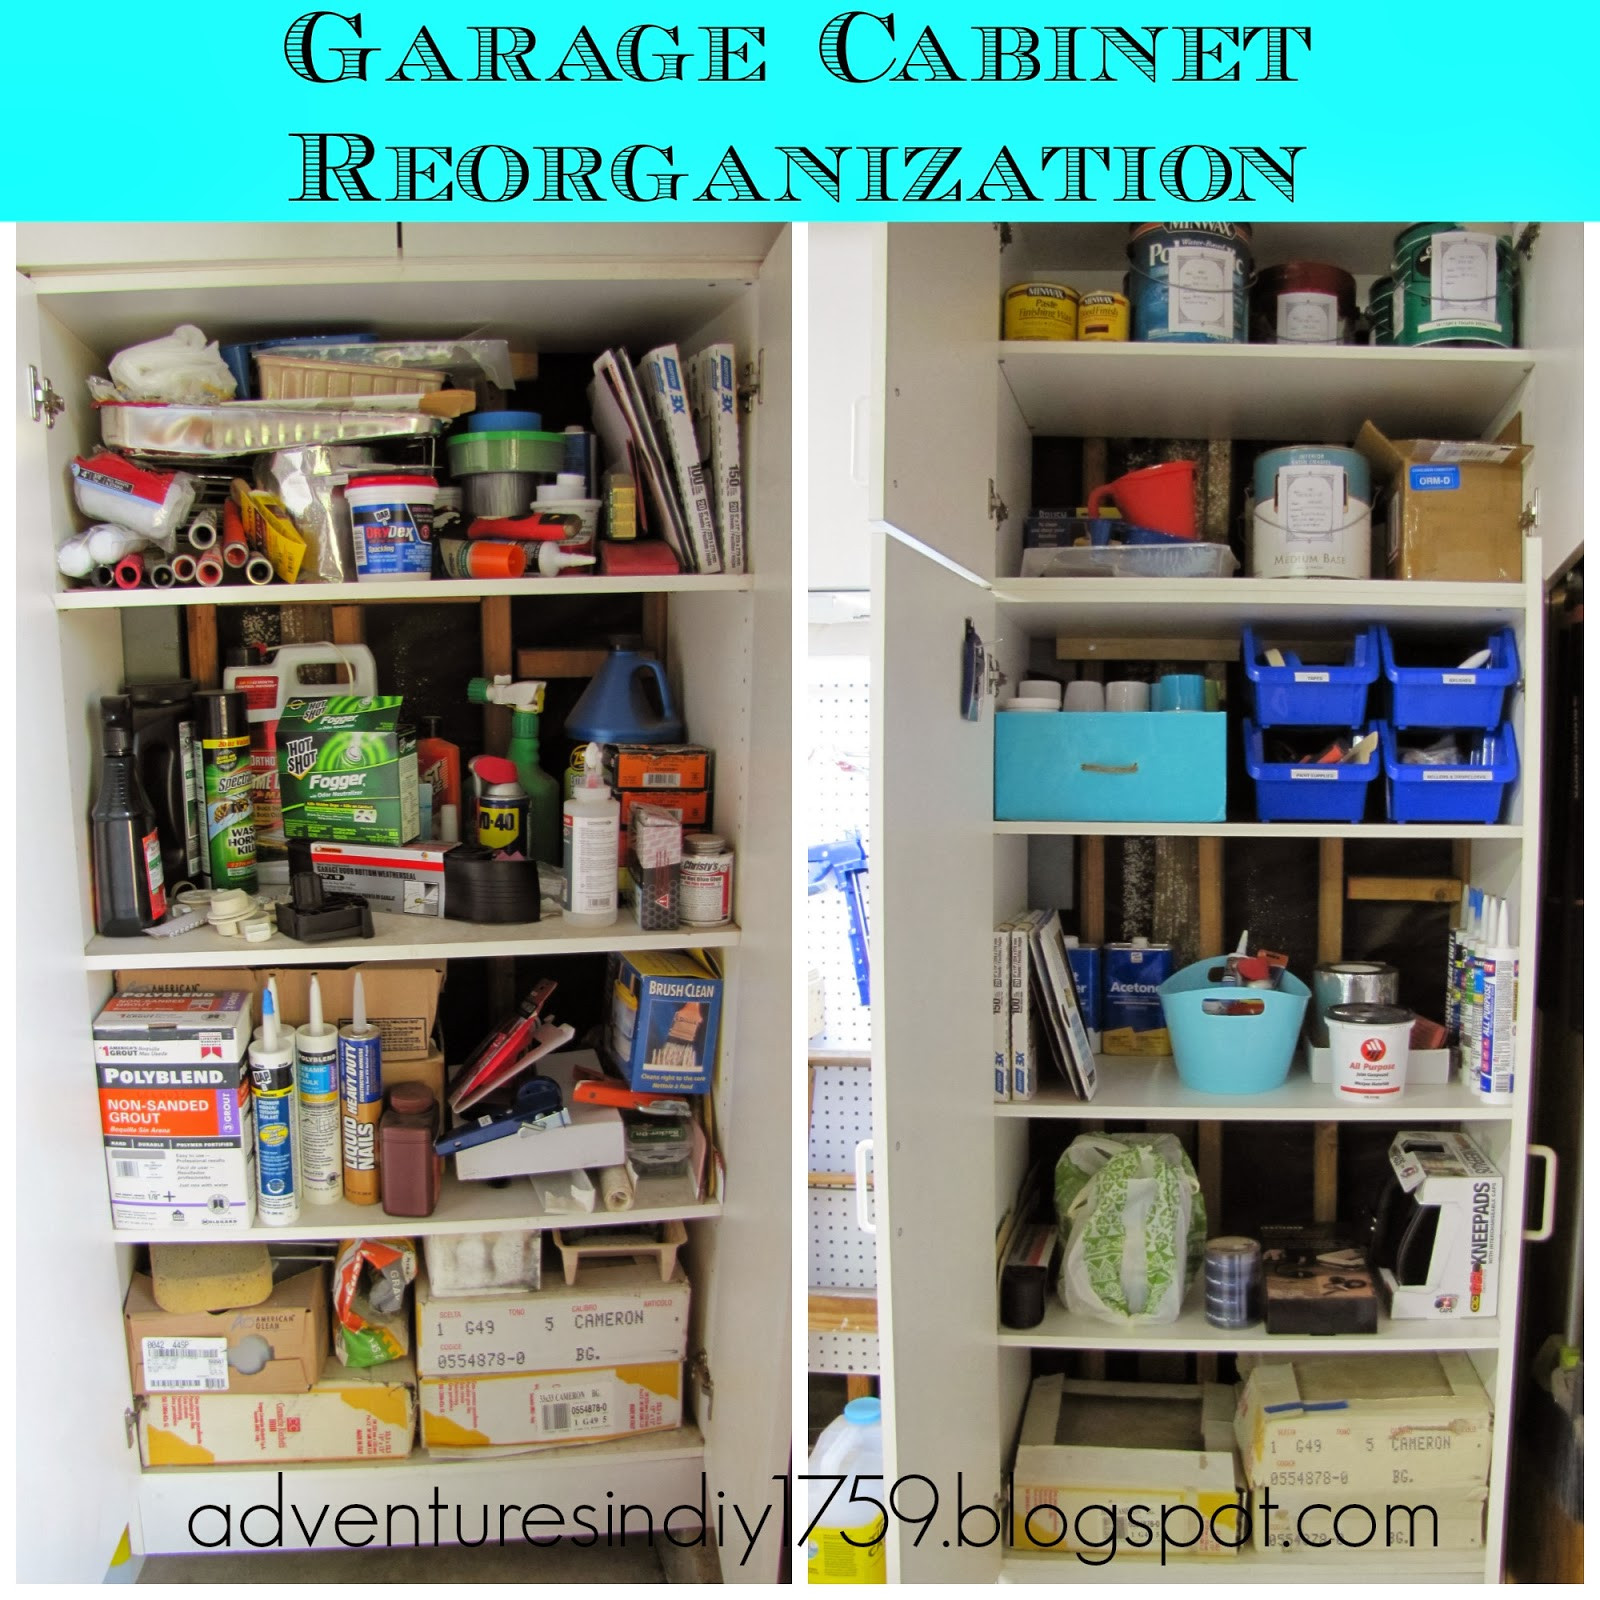 Garage Organization Cabinets
 Adventures in DIY Garage Organization Inside the Cabinets